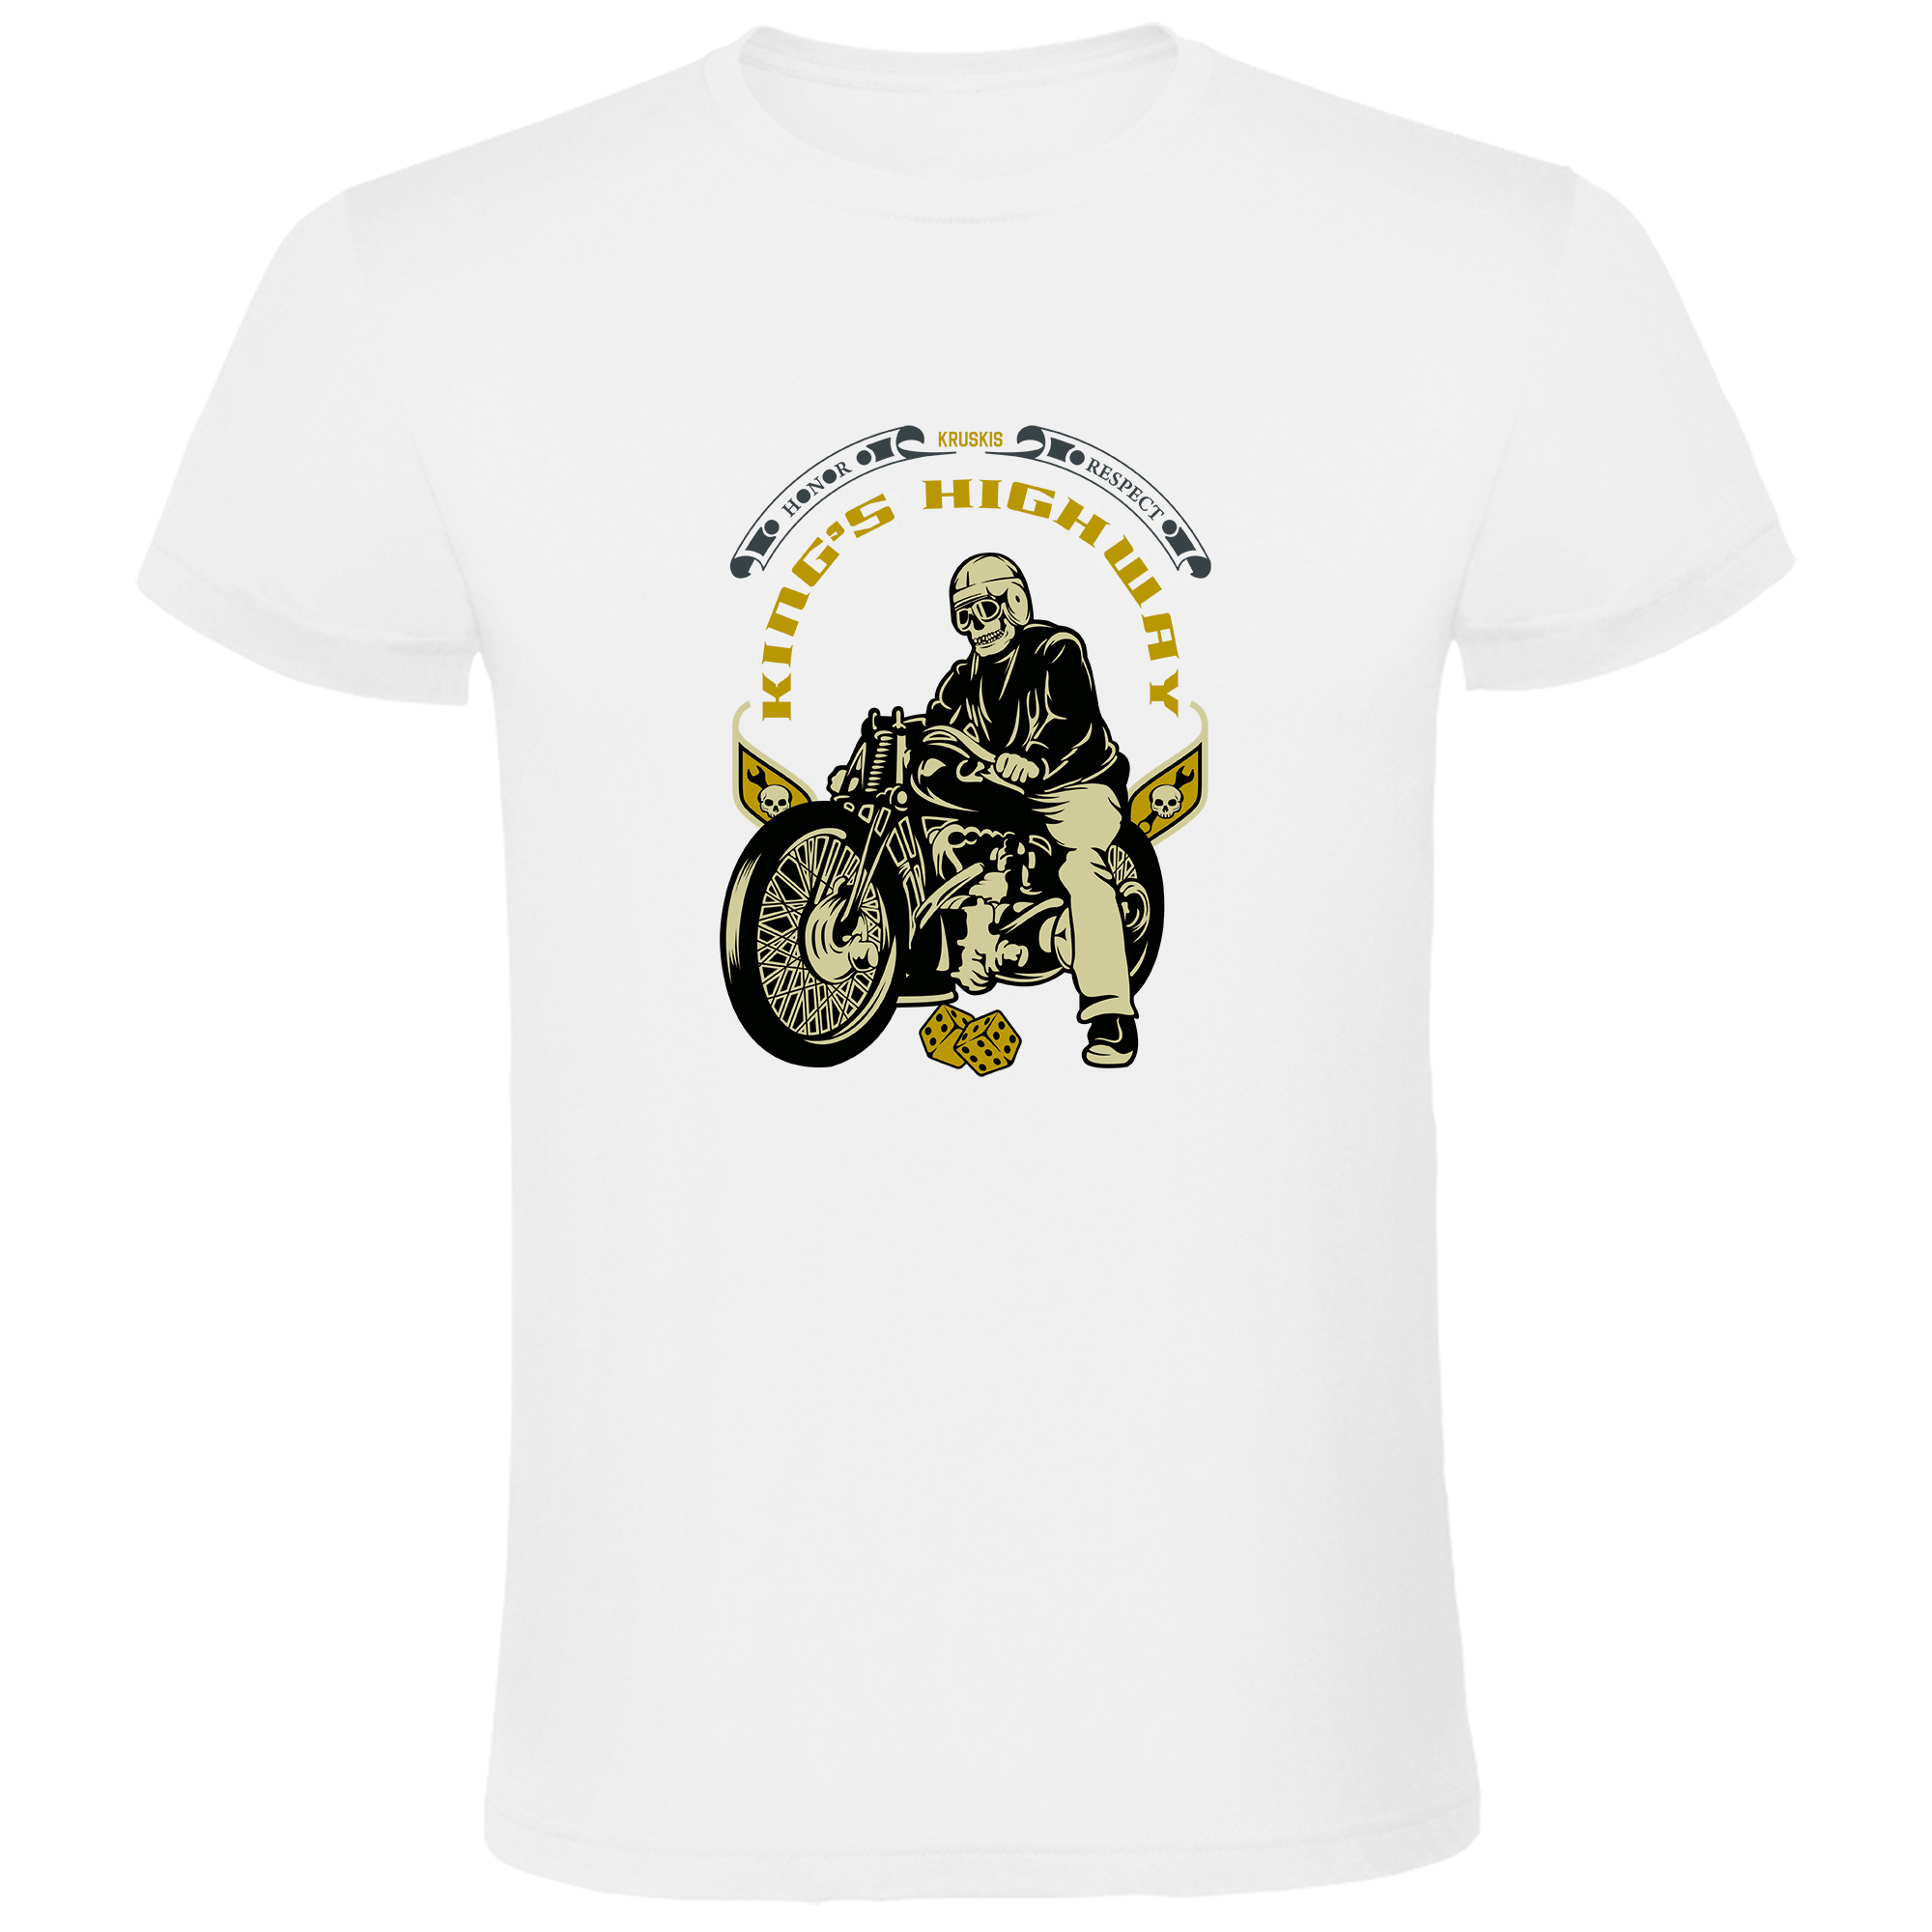 T Shirt Motorcycling Kings Highway Short Sleeves Man